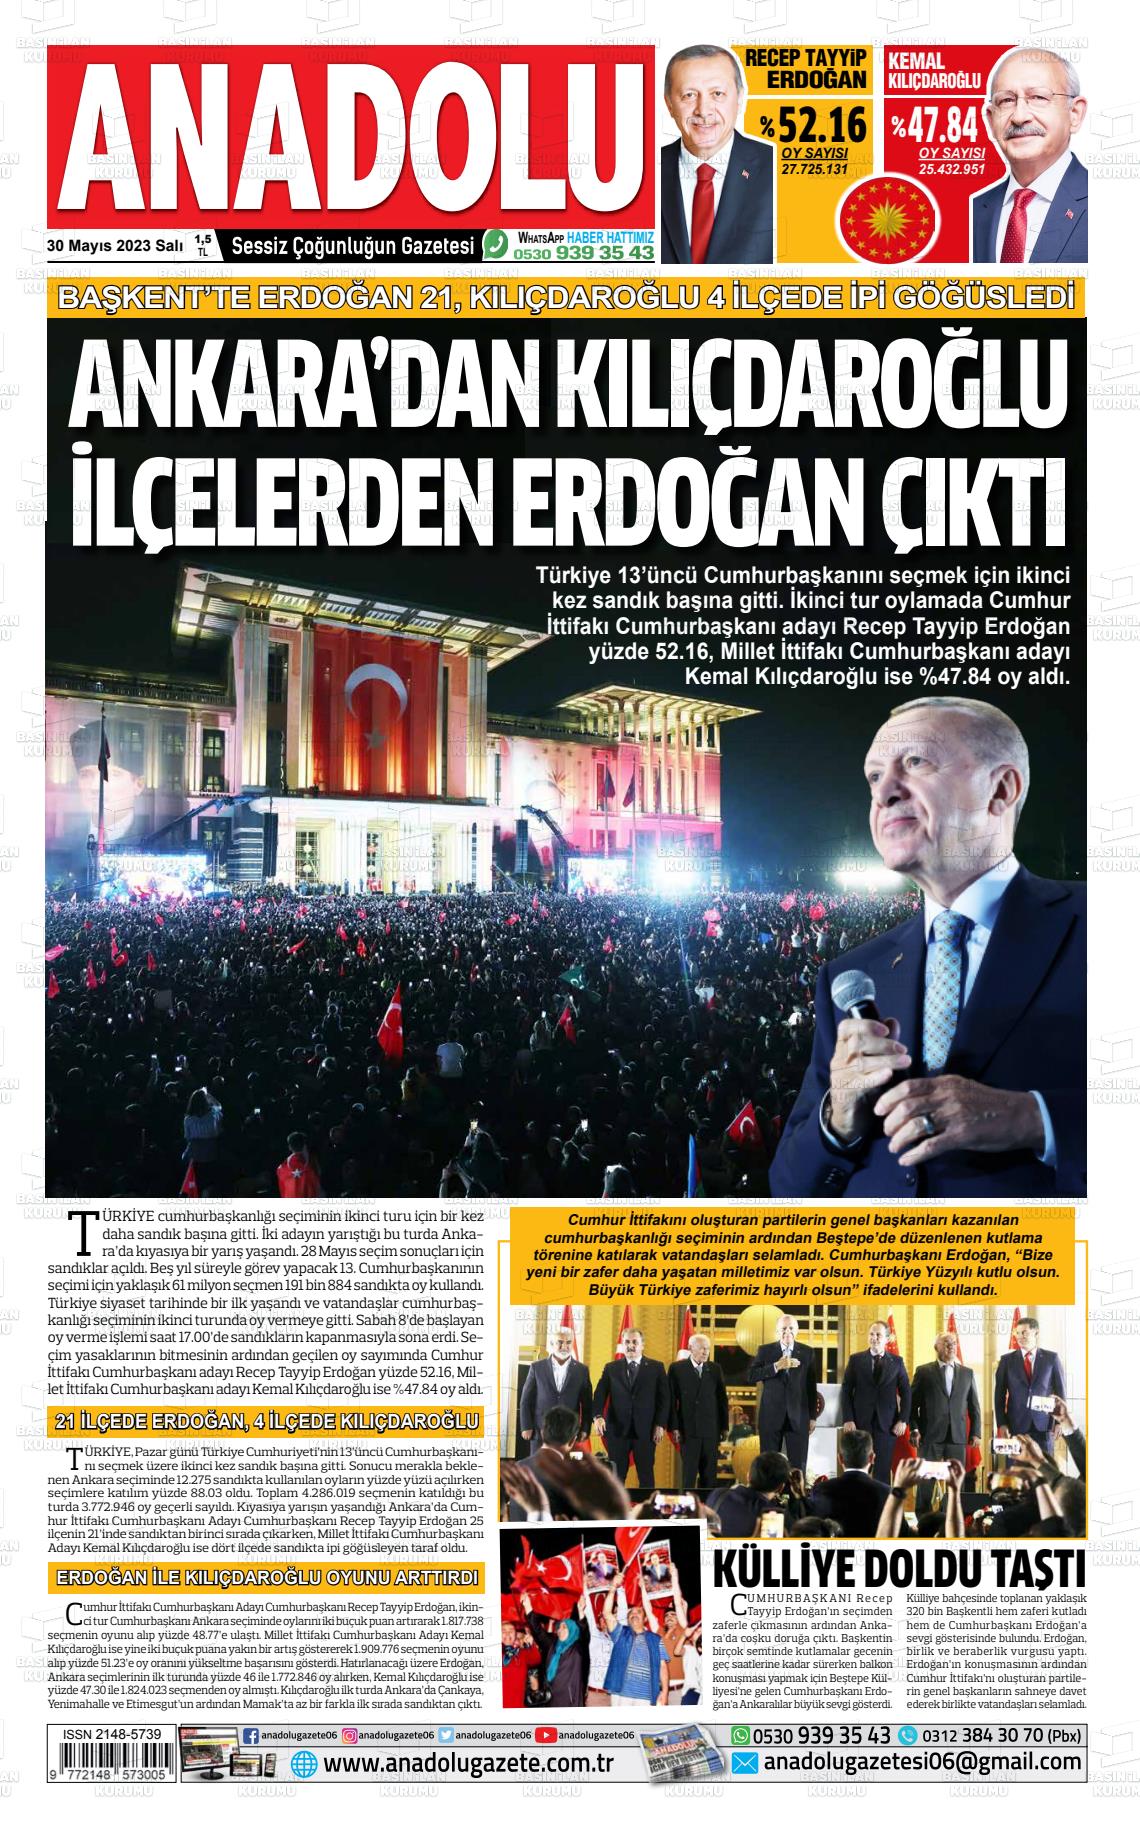 30 Mayıs 2023 Ankara Anadolu Gazete Manşeti